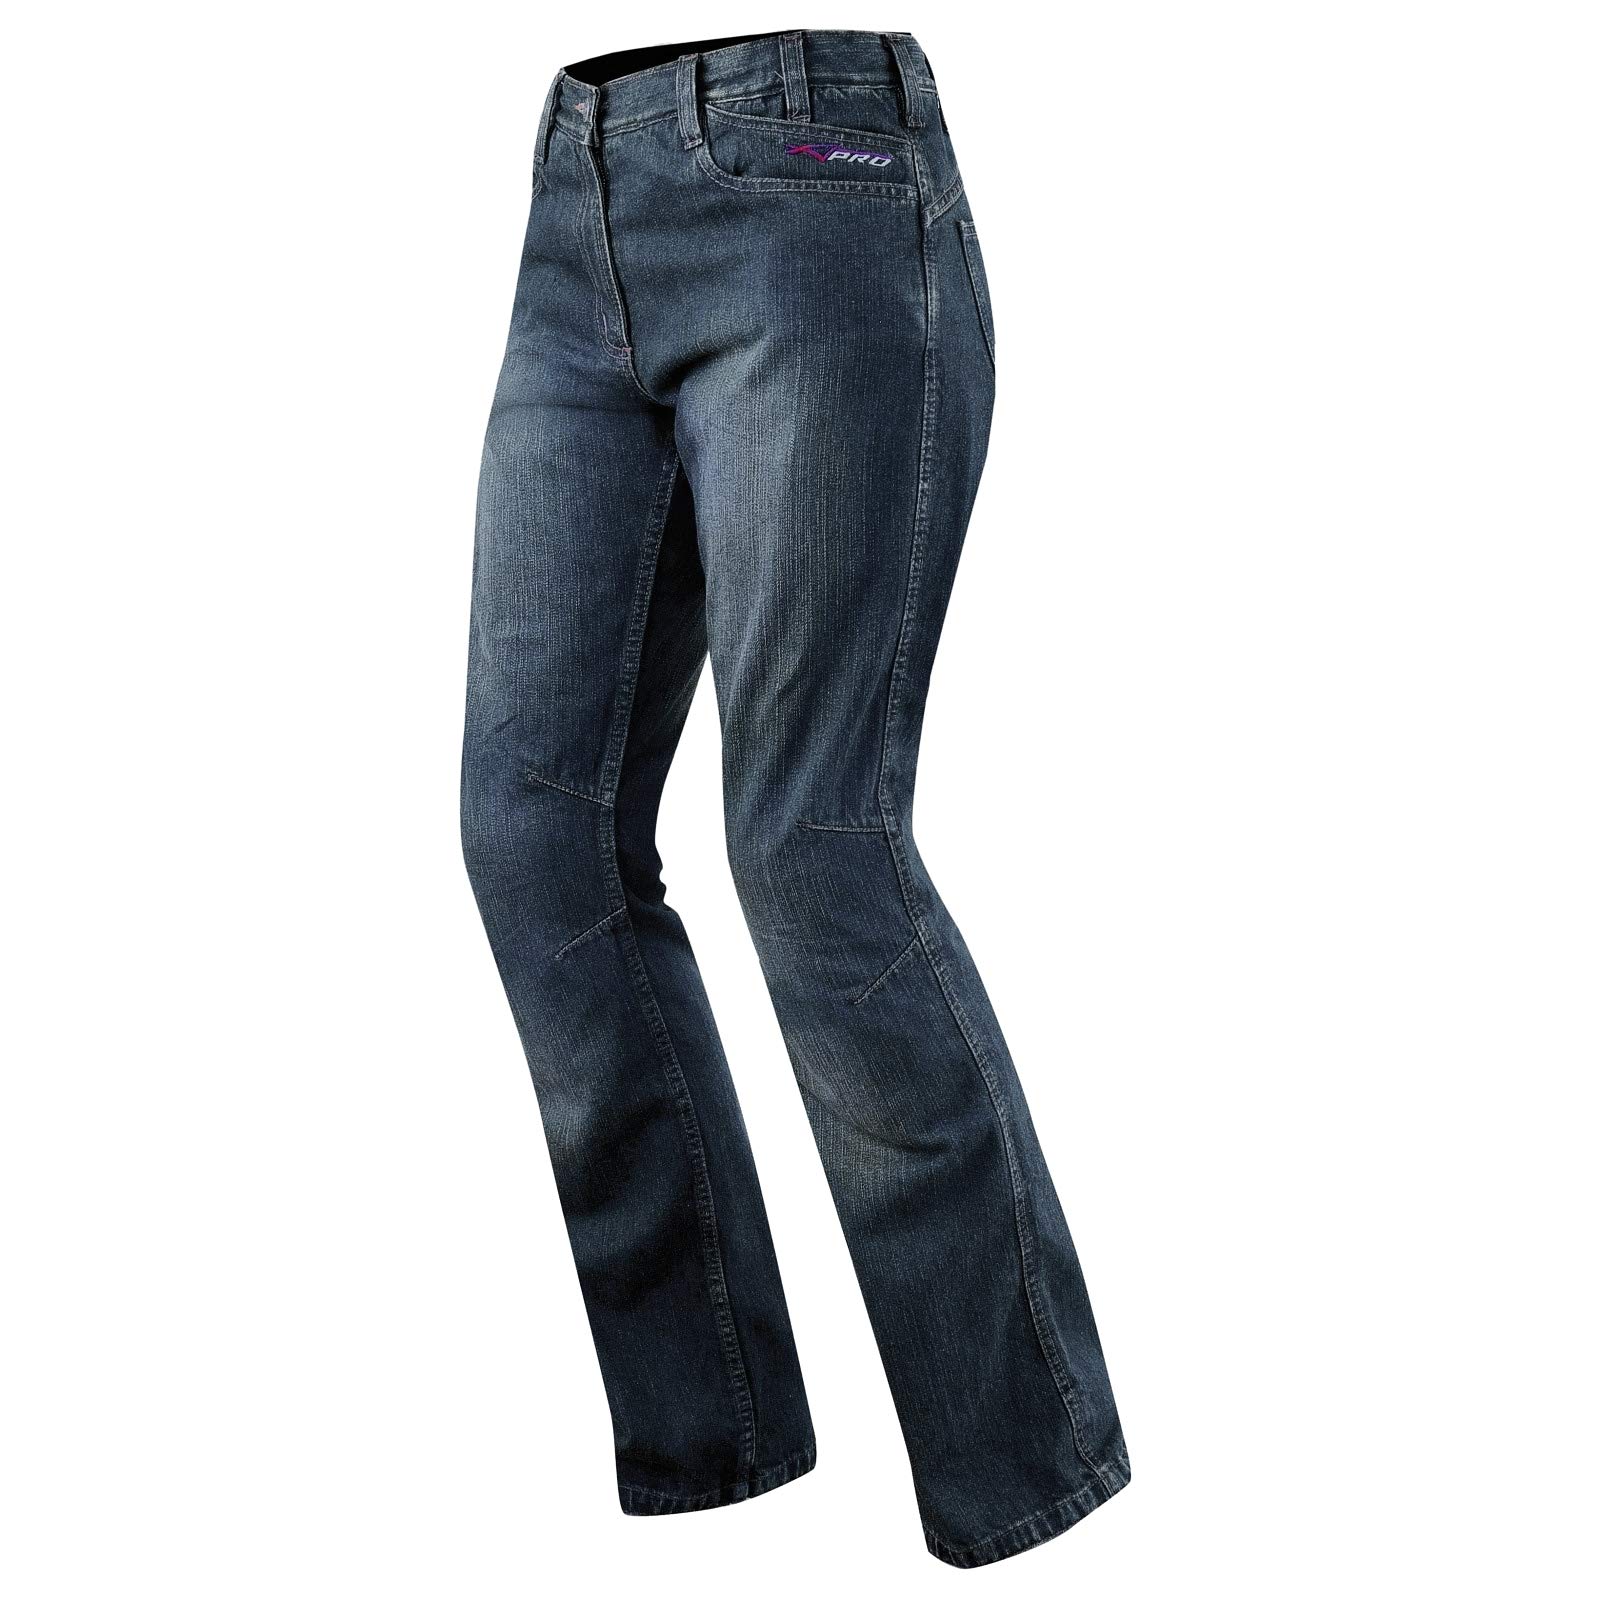 A-Pro Jeans Damen Denim CE Knie Protektoren Motorrad Biker Pants Hose Blau 26 von A-Pro